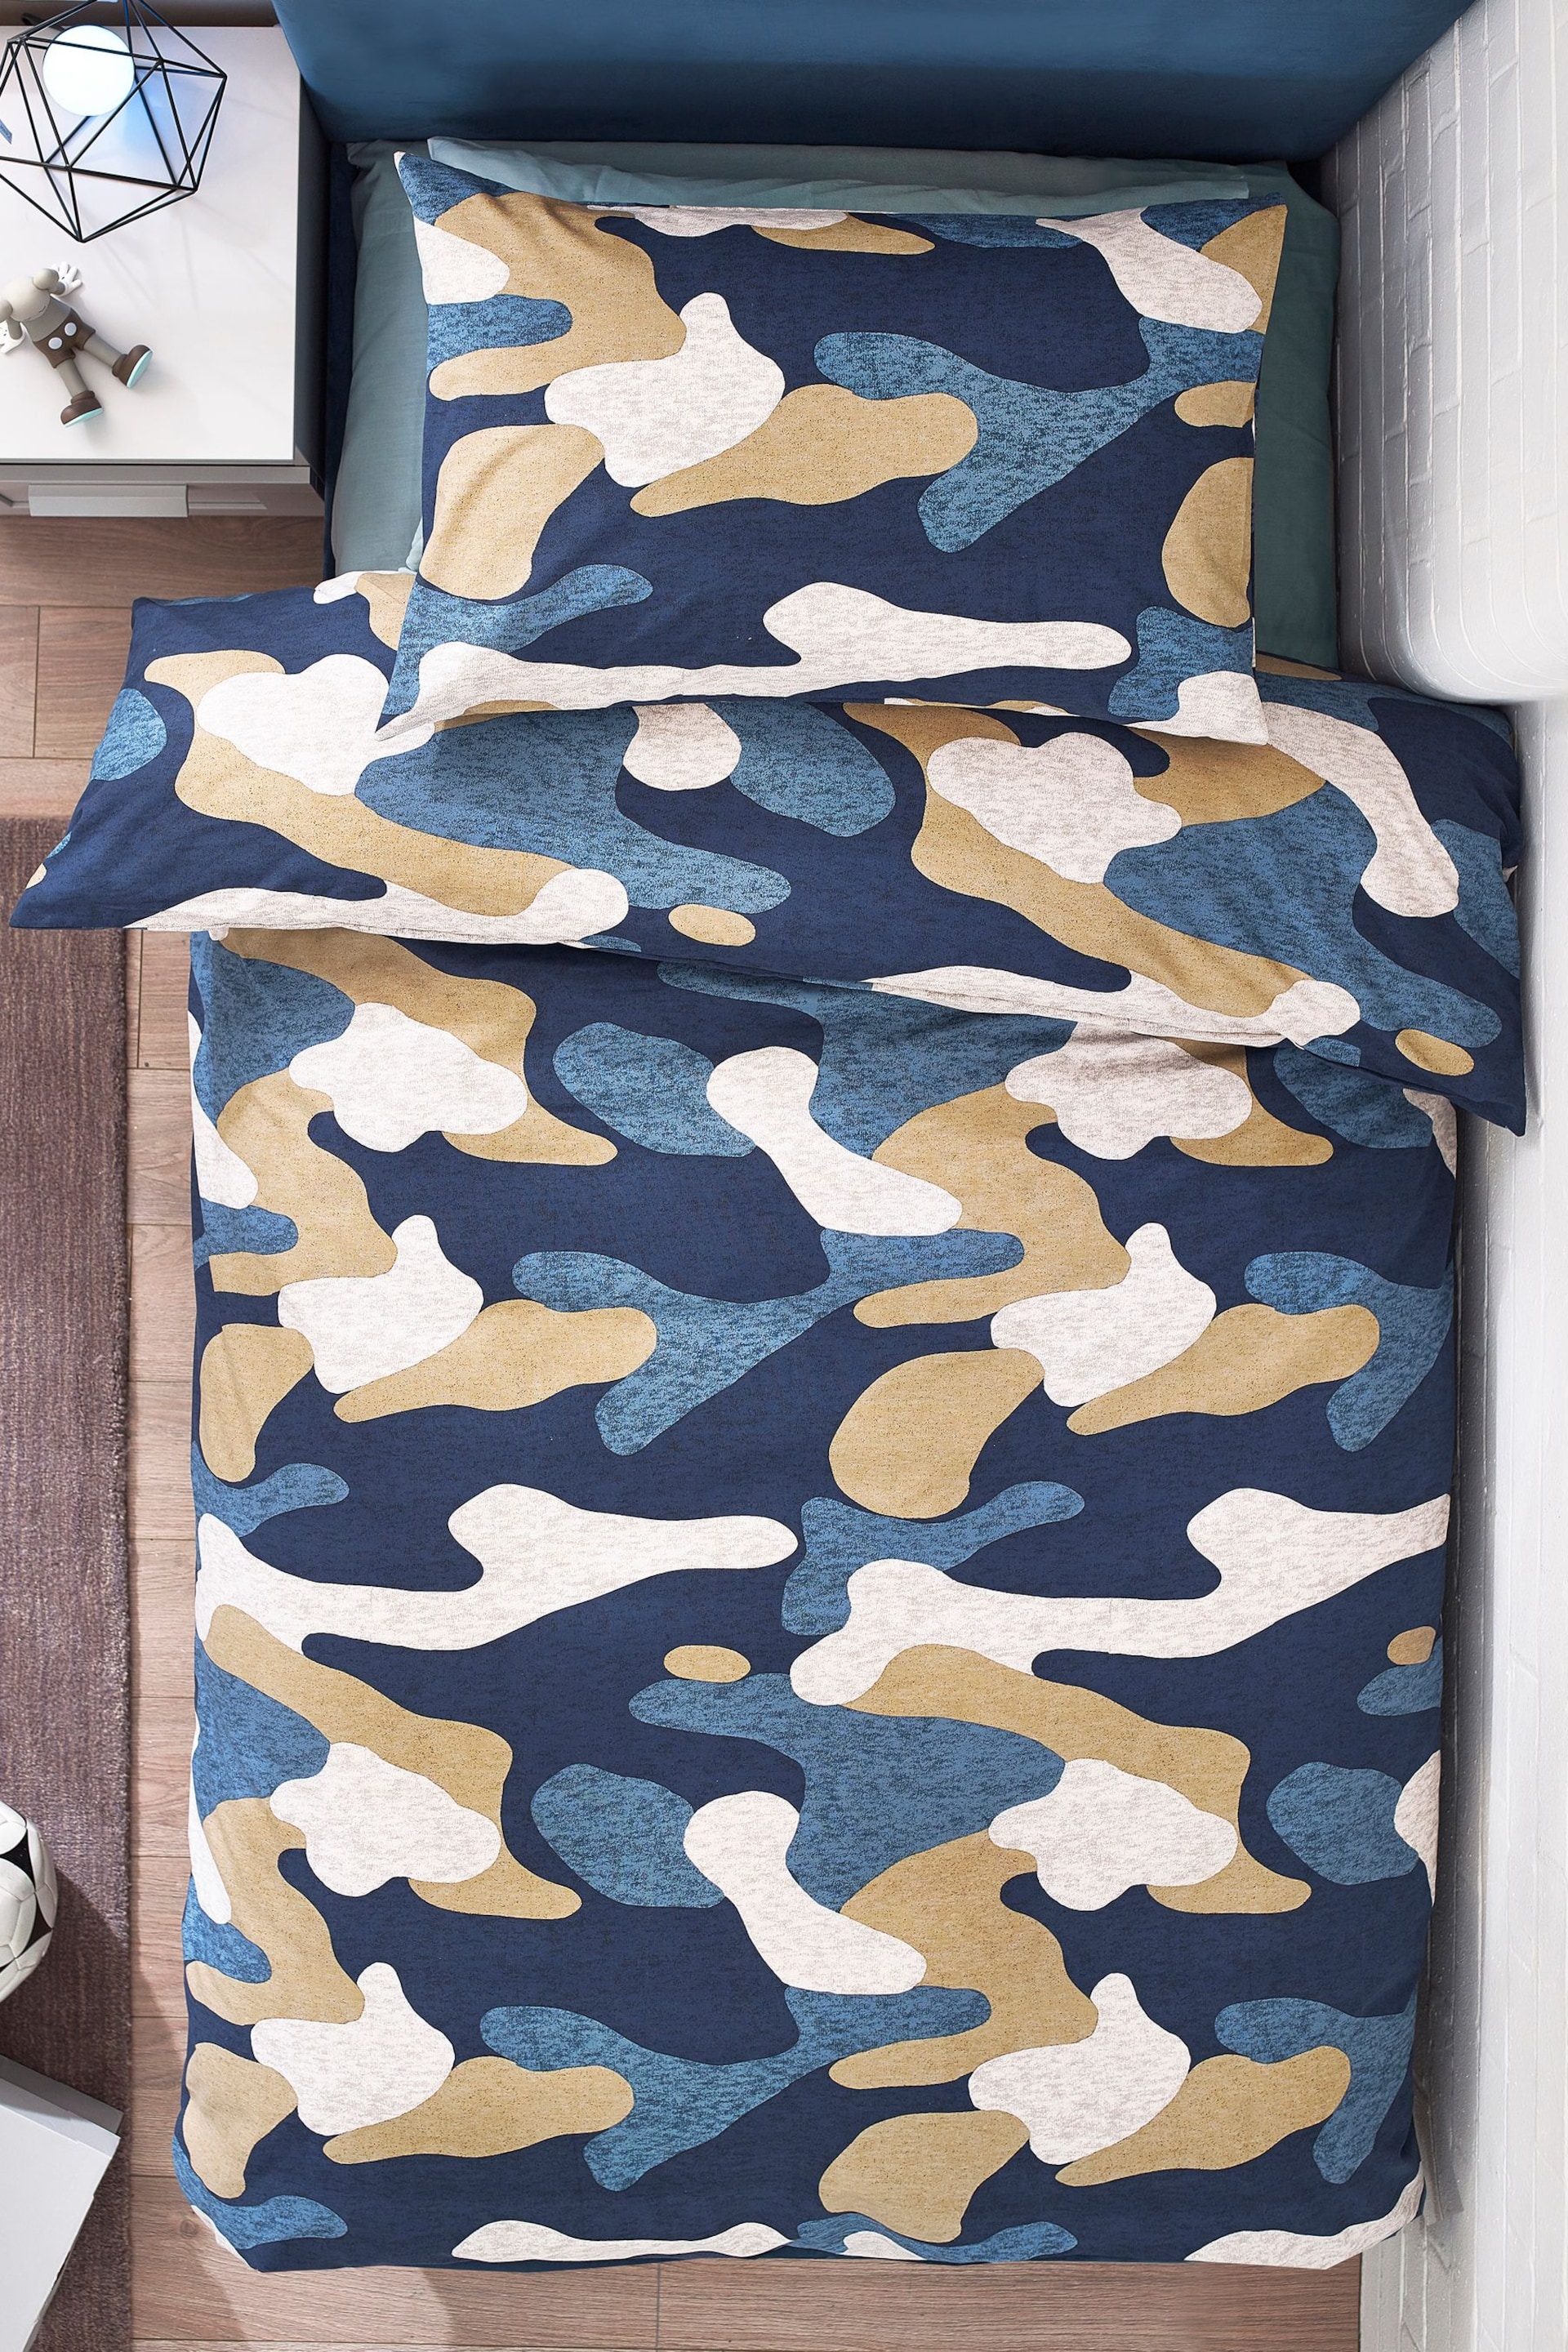 Blue Camo Duvet Cover and Pillowcase Set - Image 2 of 6